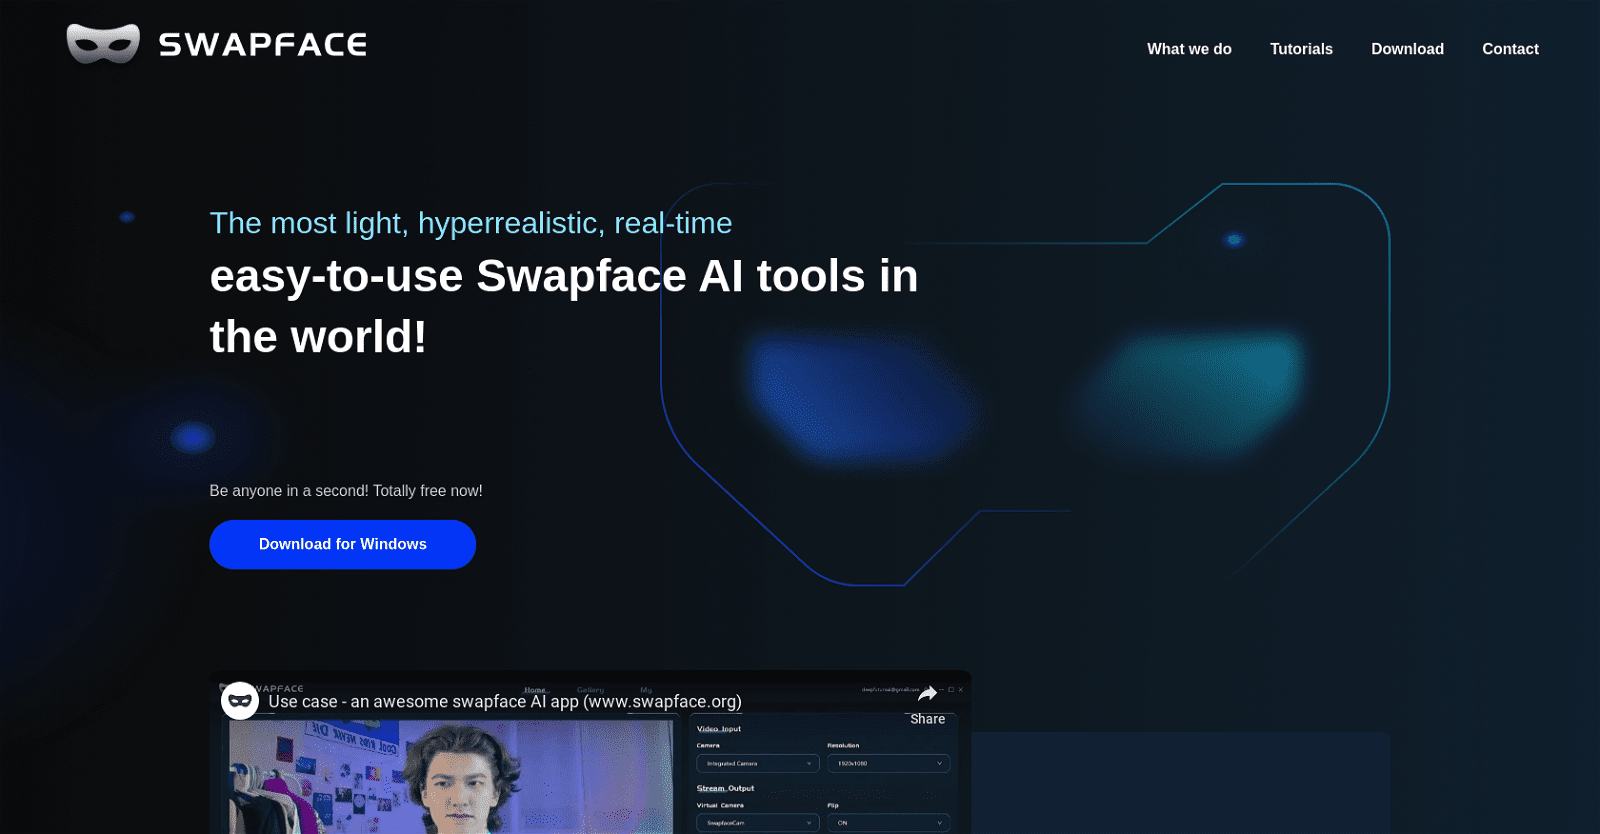 Swapface homepage image